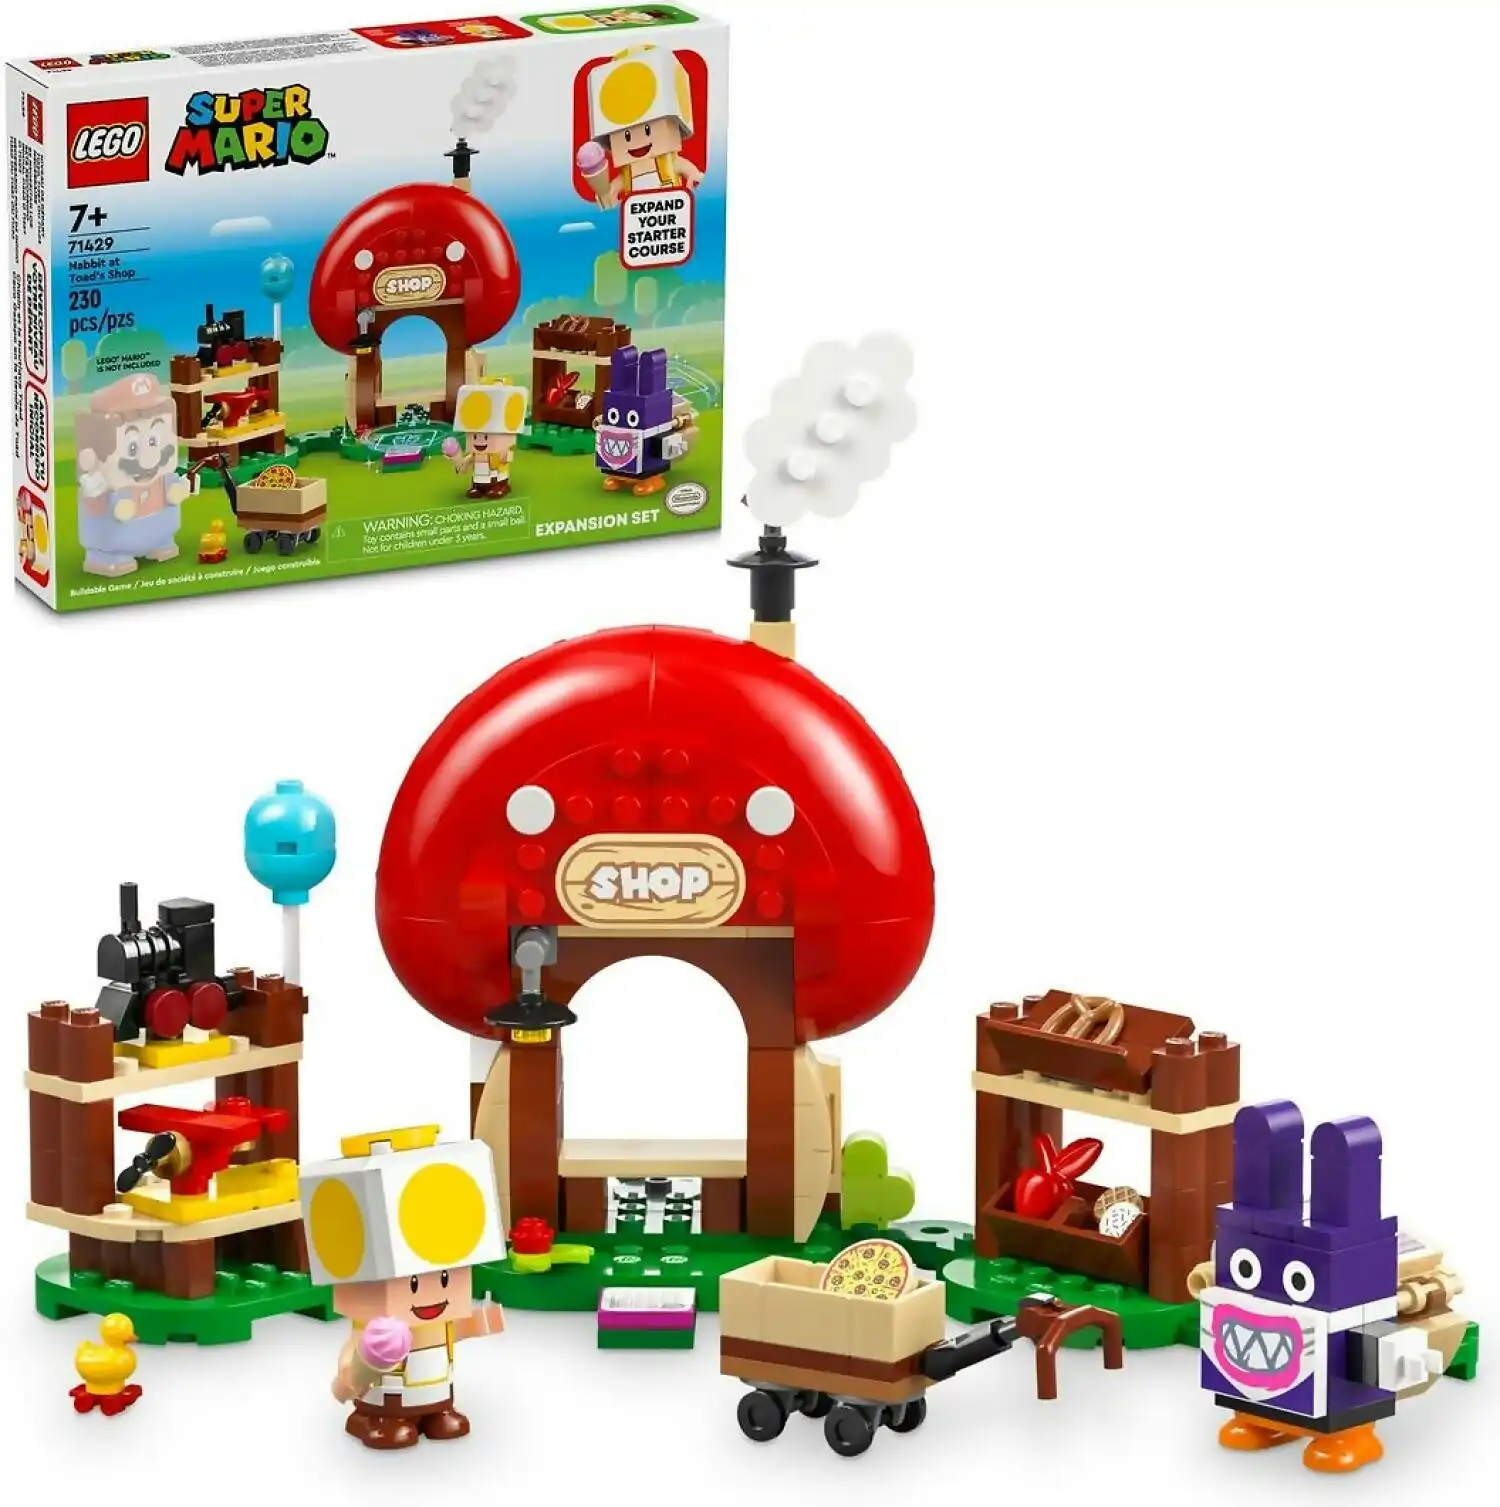 LEGO 71429 Nabbit at Toad's Shop Expansion Set - Super Mario